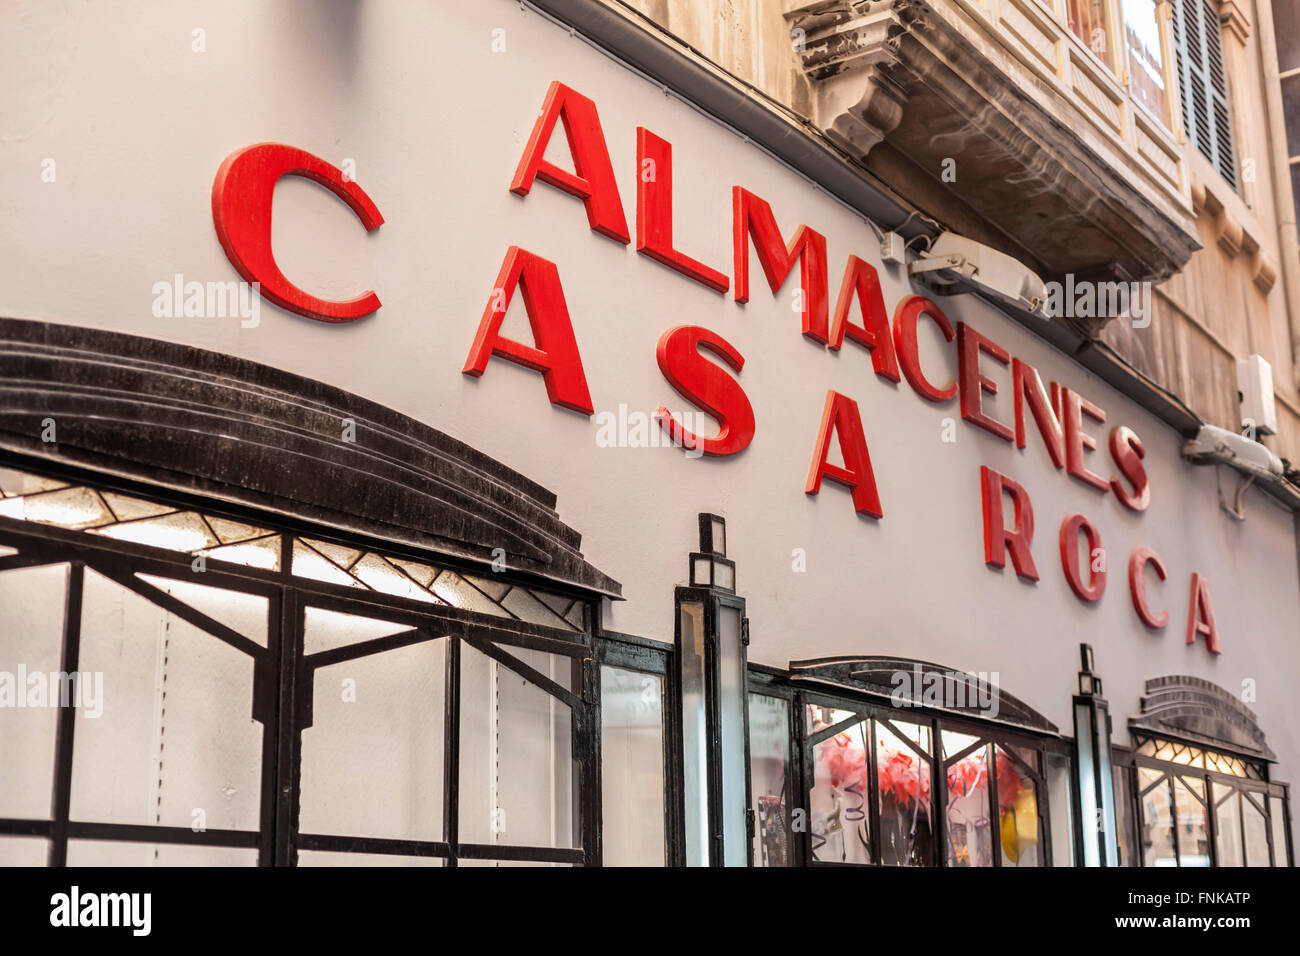 Boutique façade almacenes casa roca.Palma de Majorque, Iles Baléares, Espagne. Banque D'Images